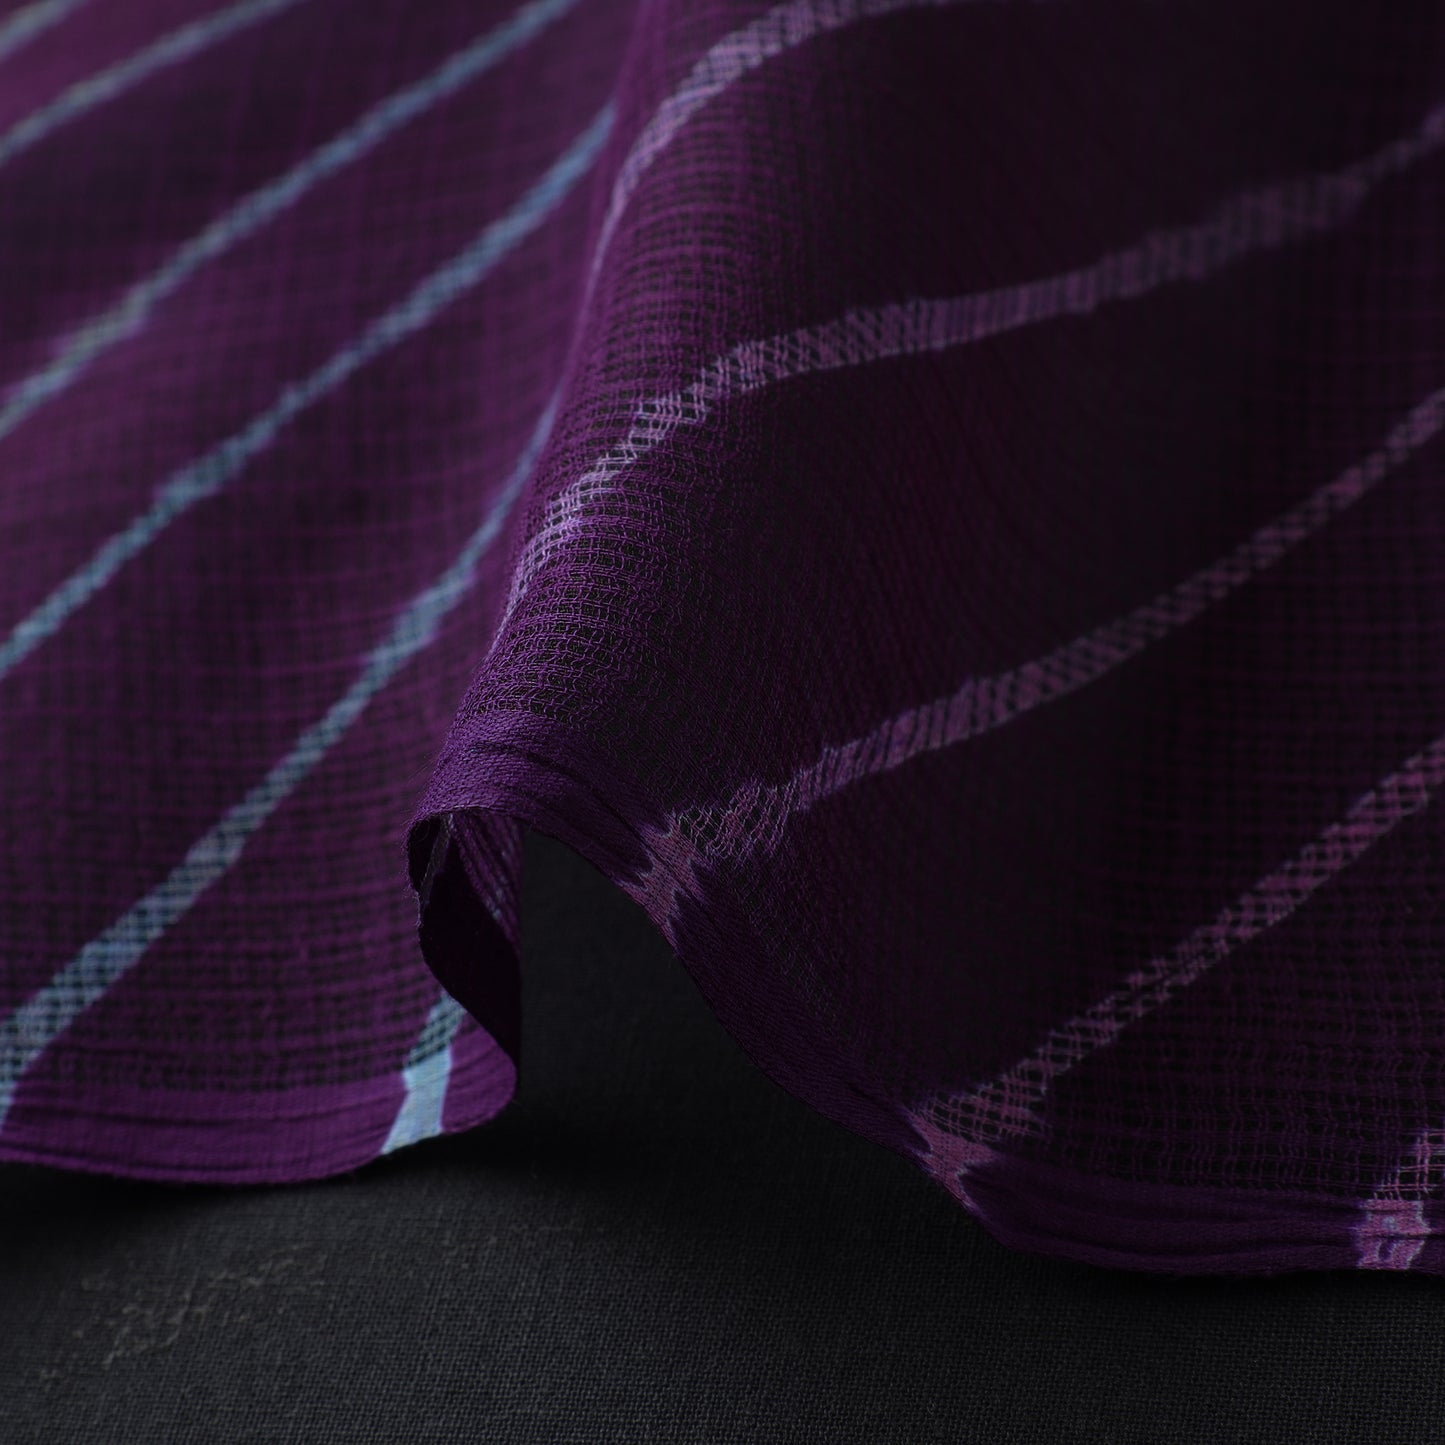 Purple - Leheriya Tie-Dye Kota Doria Cotton Fabric 03